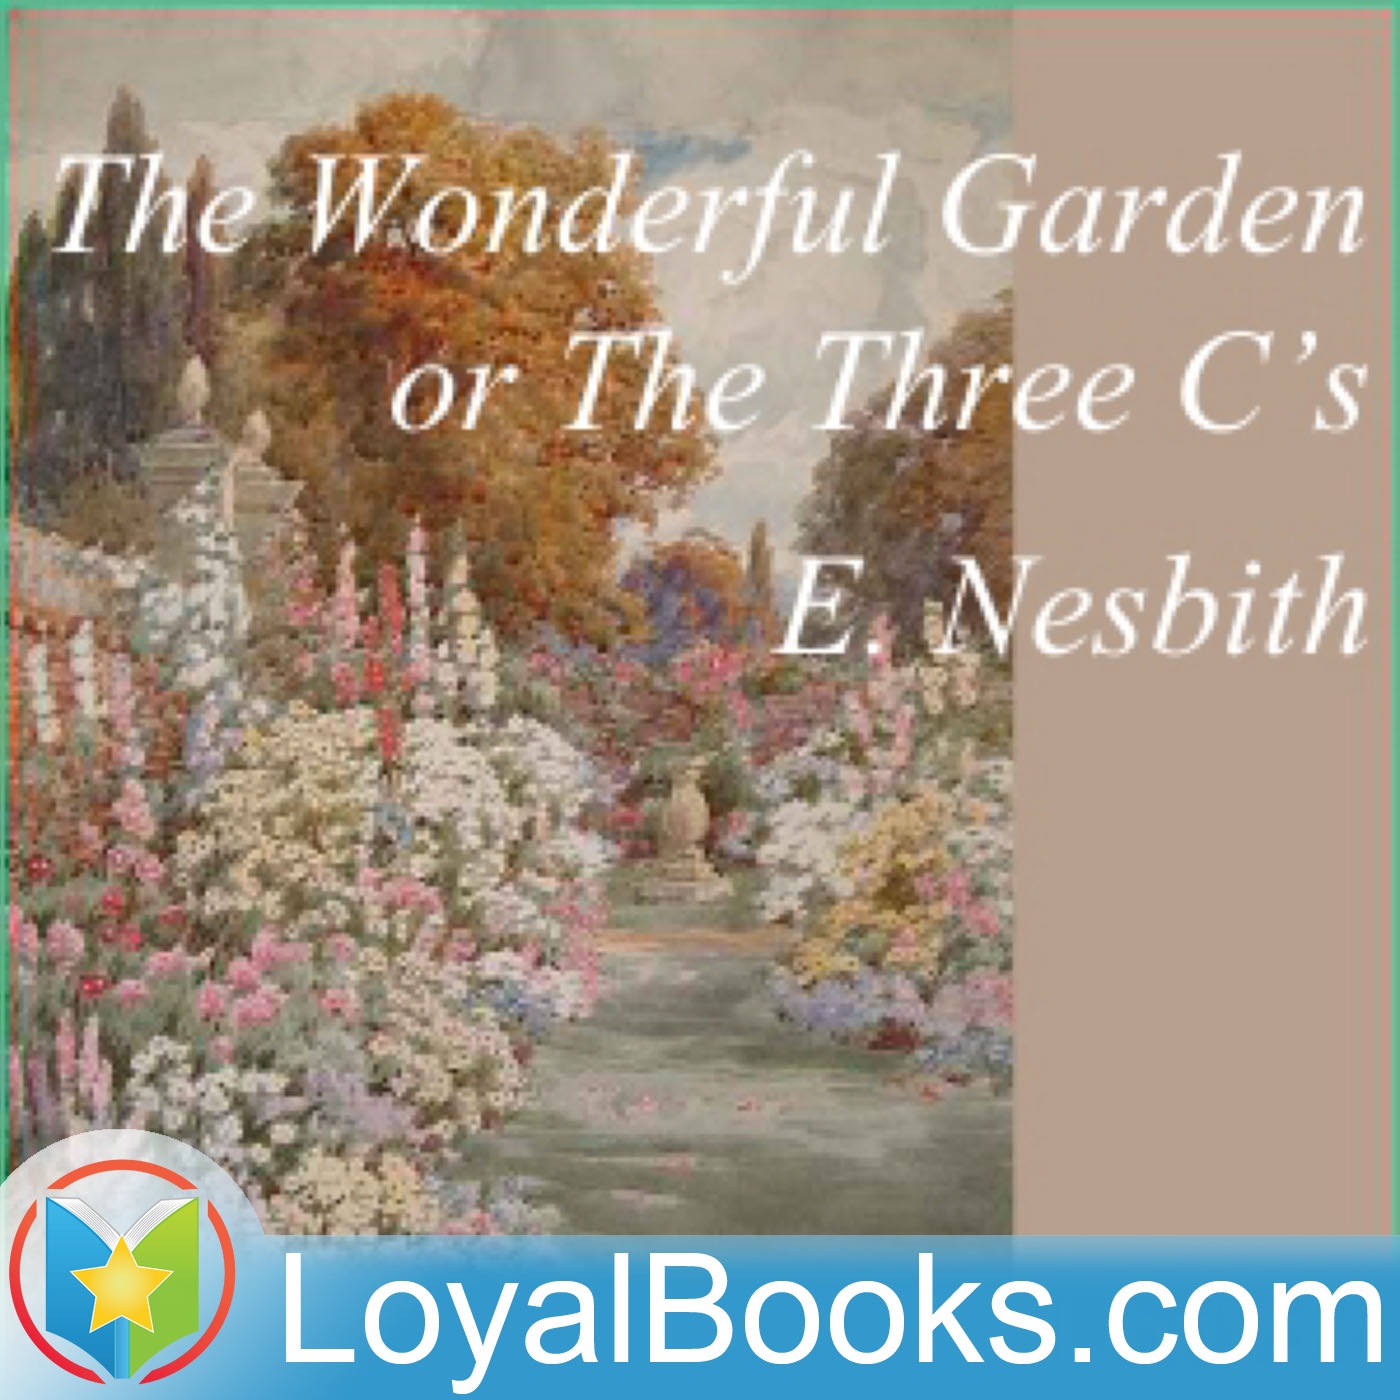 The Wonderful Garden or The Three C.'s by Edith Nesbit